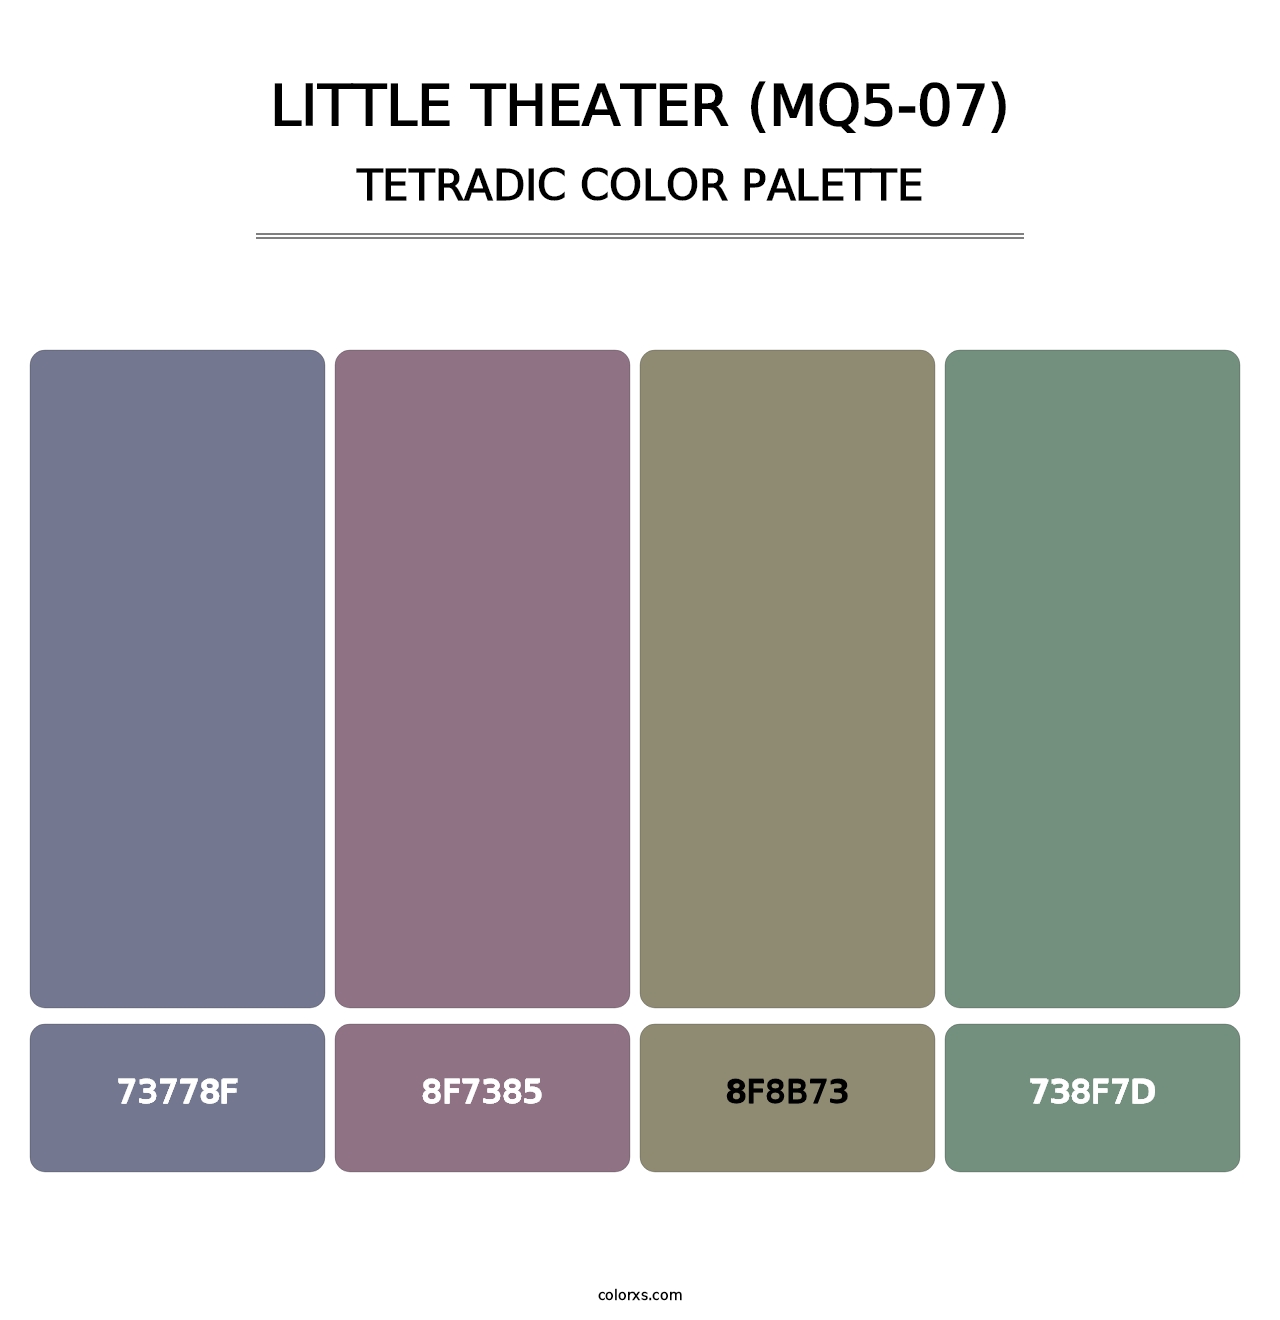 Little Theater (MQ5-07) - Tetradic Color Palette